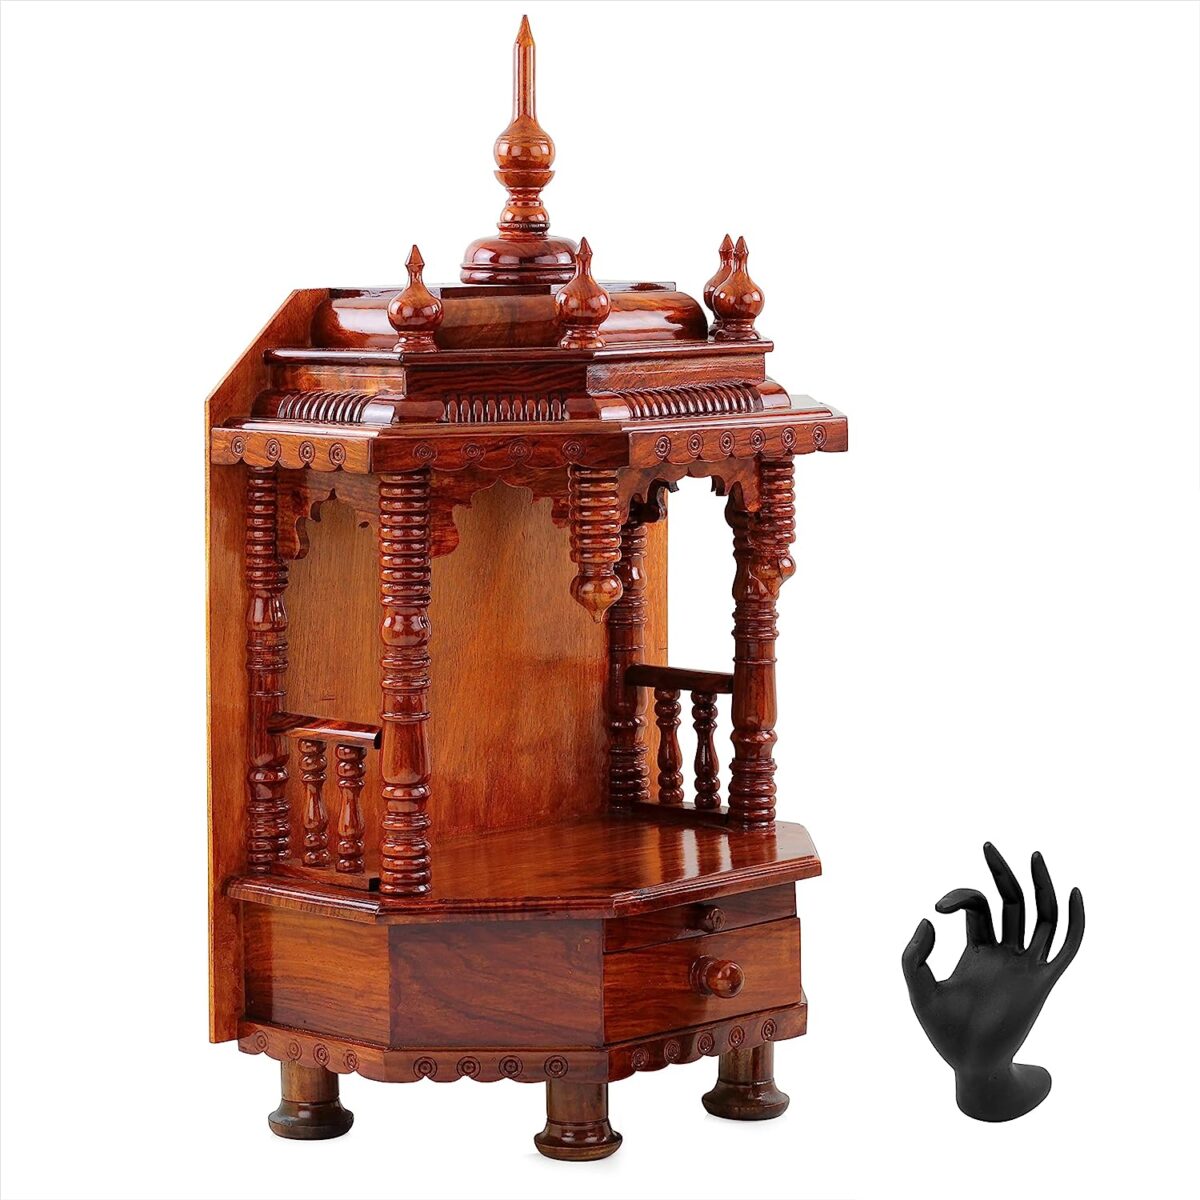 Nagina International Premium Hand Made Wooden Temple, Wooden Indian Mandir